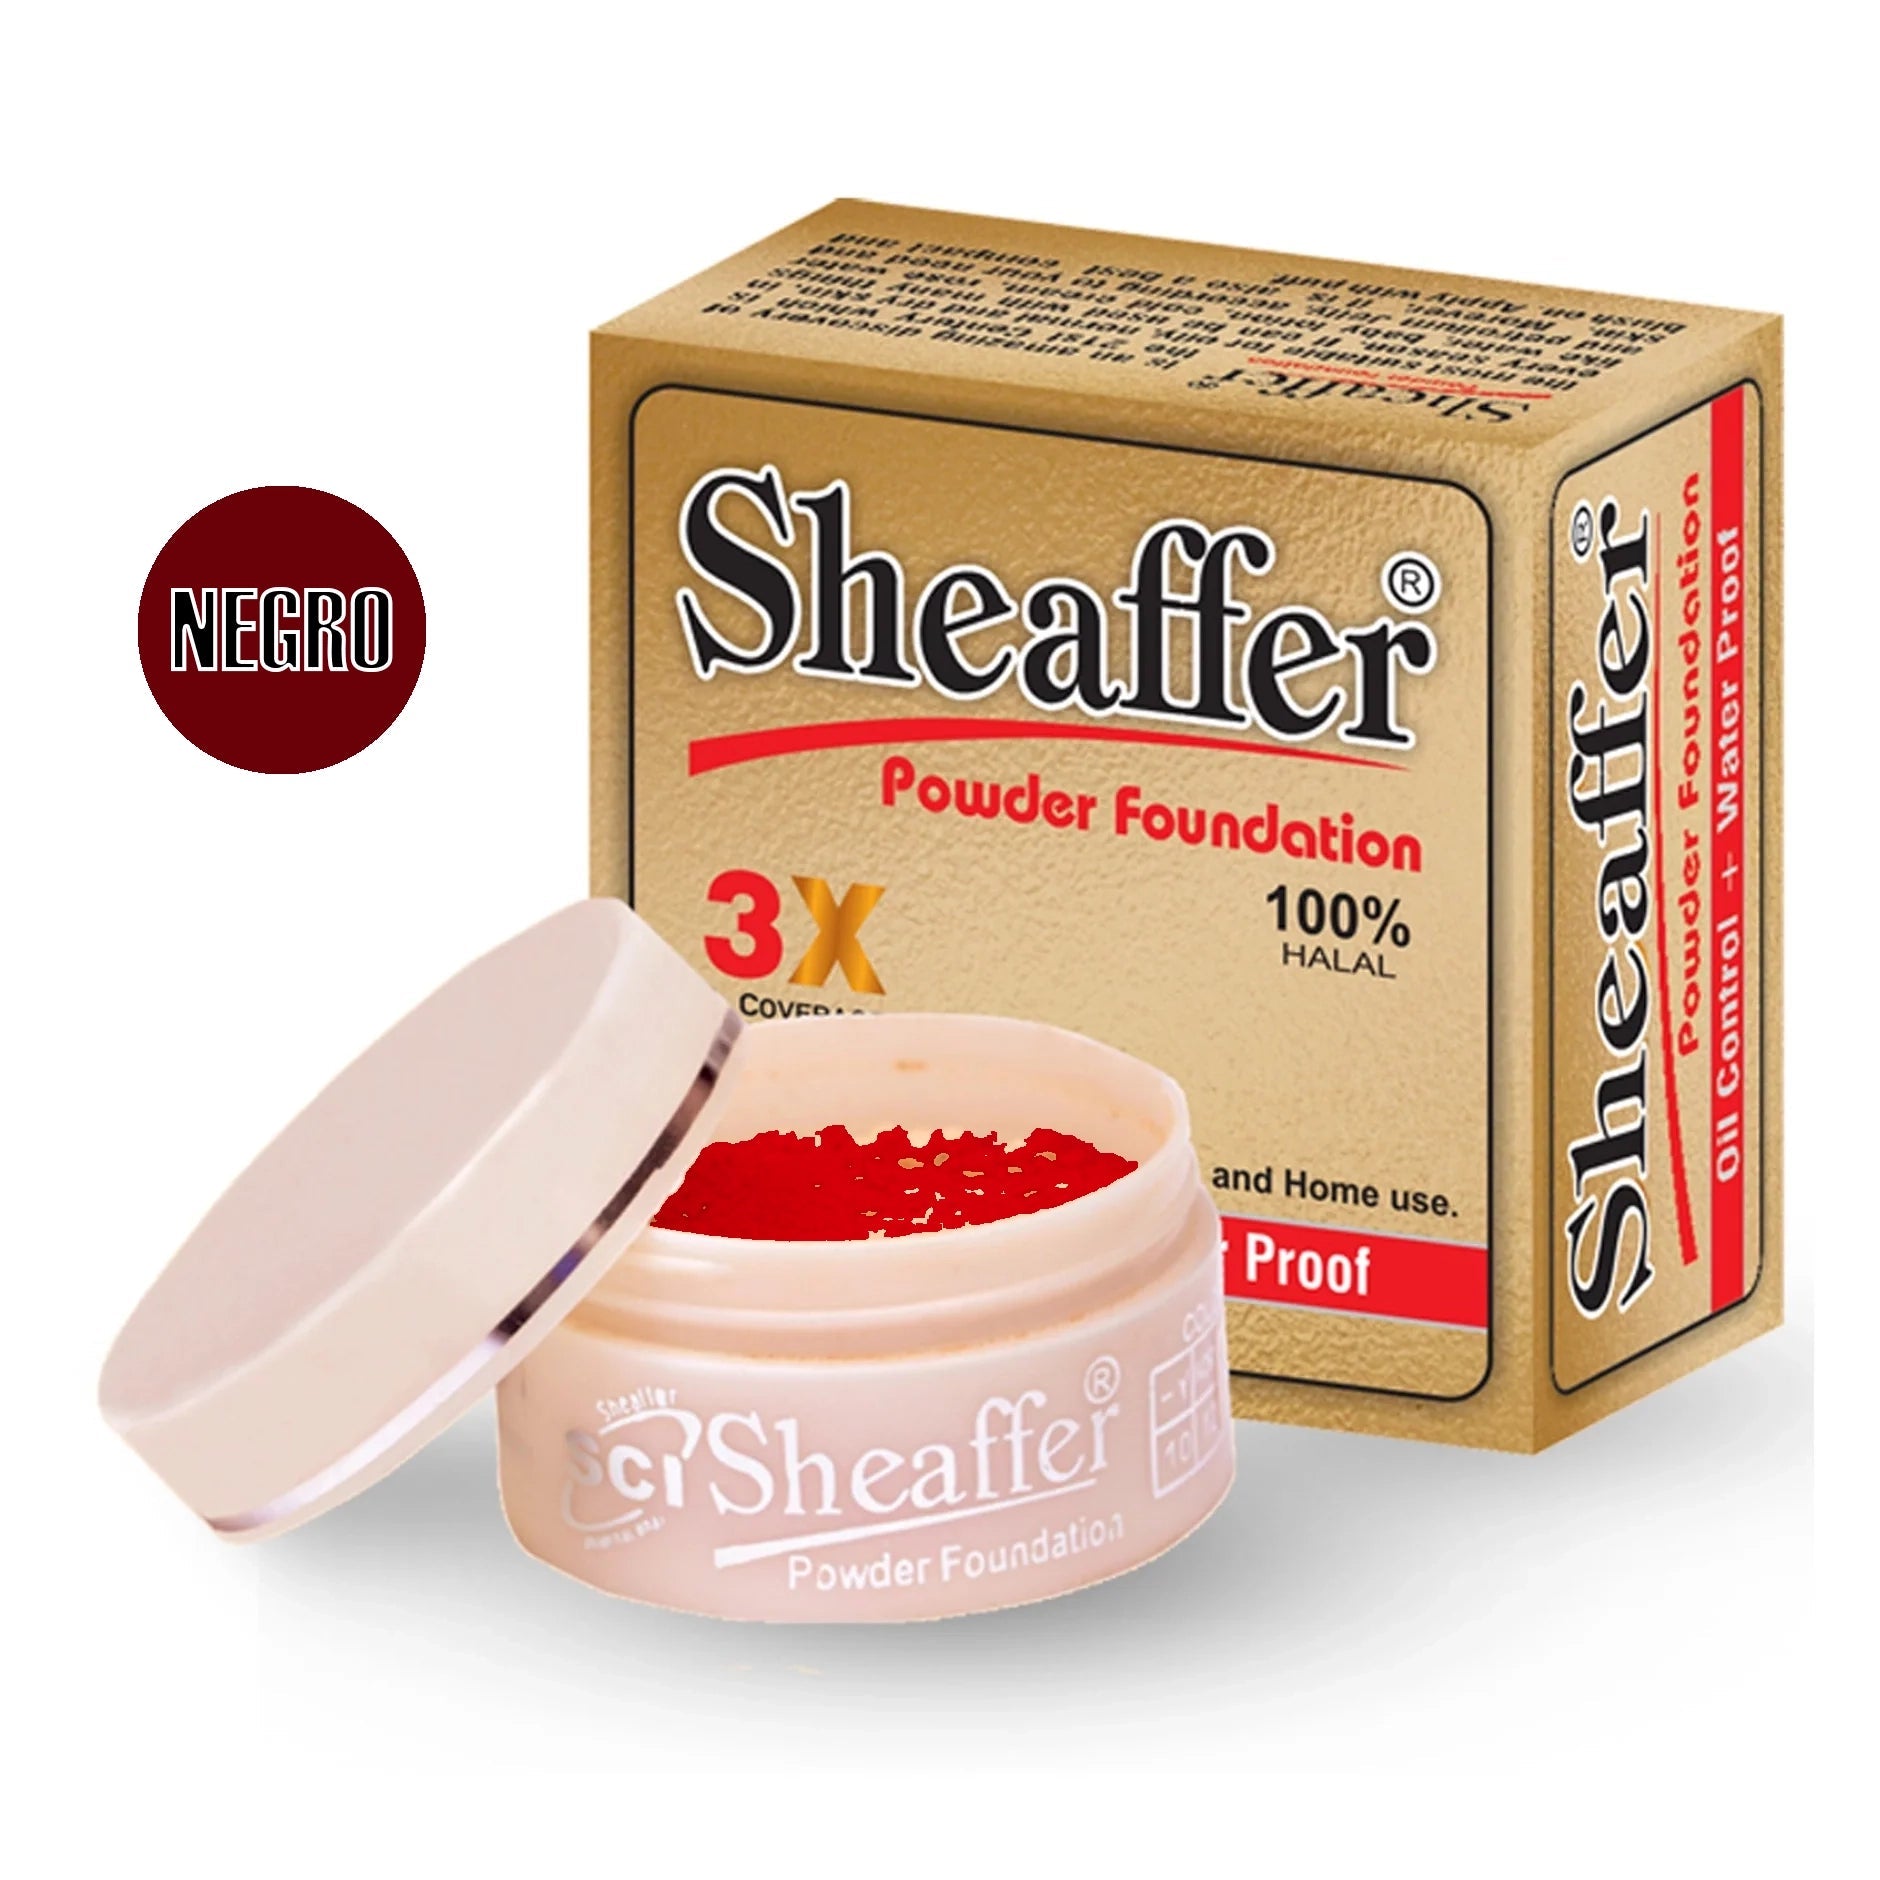 Sheaffer Powder Foundation Base Ivory Shade - Retailershop - Online Shopping Center